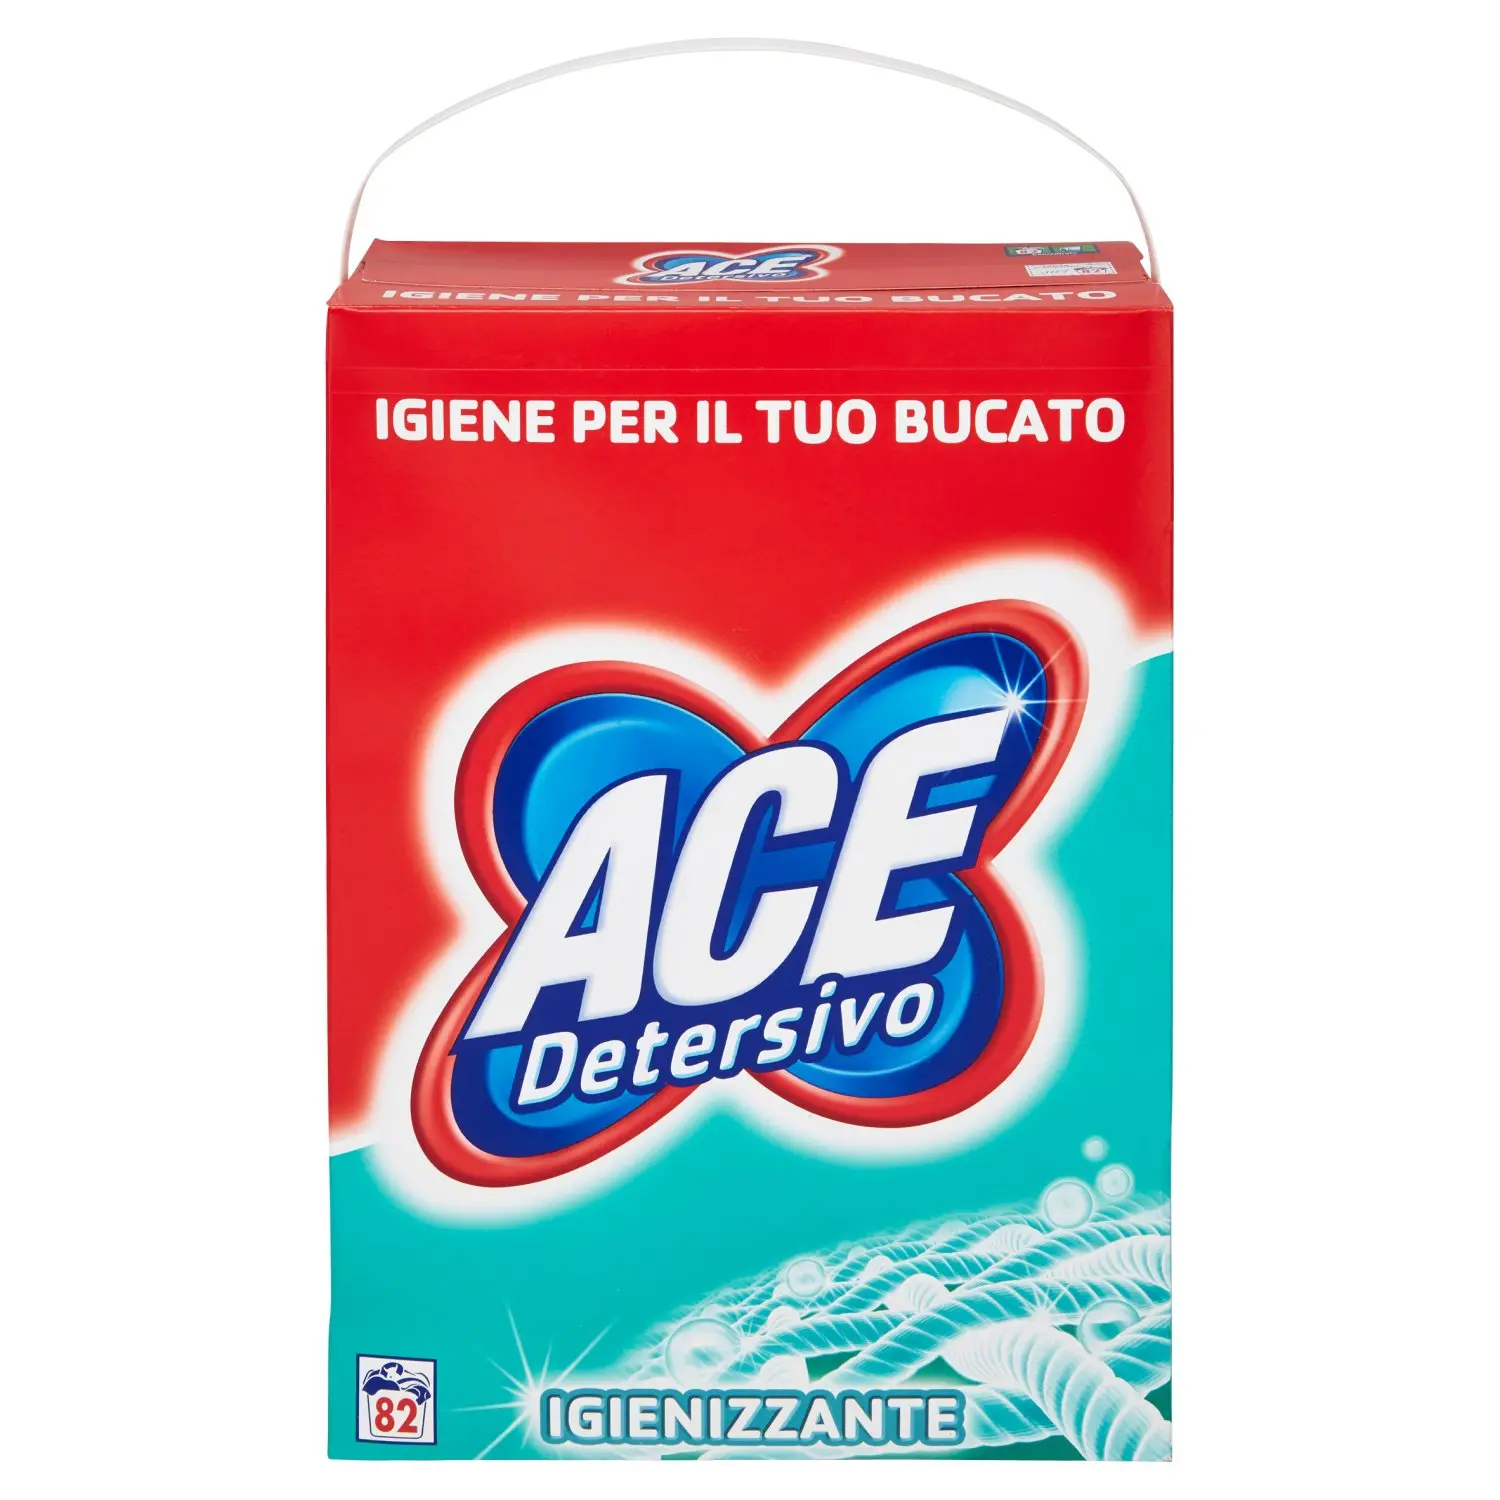 Ace Detersivo Igienizzante 5330 g